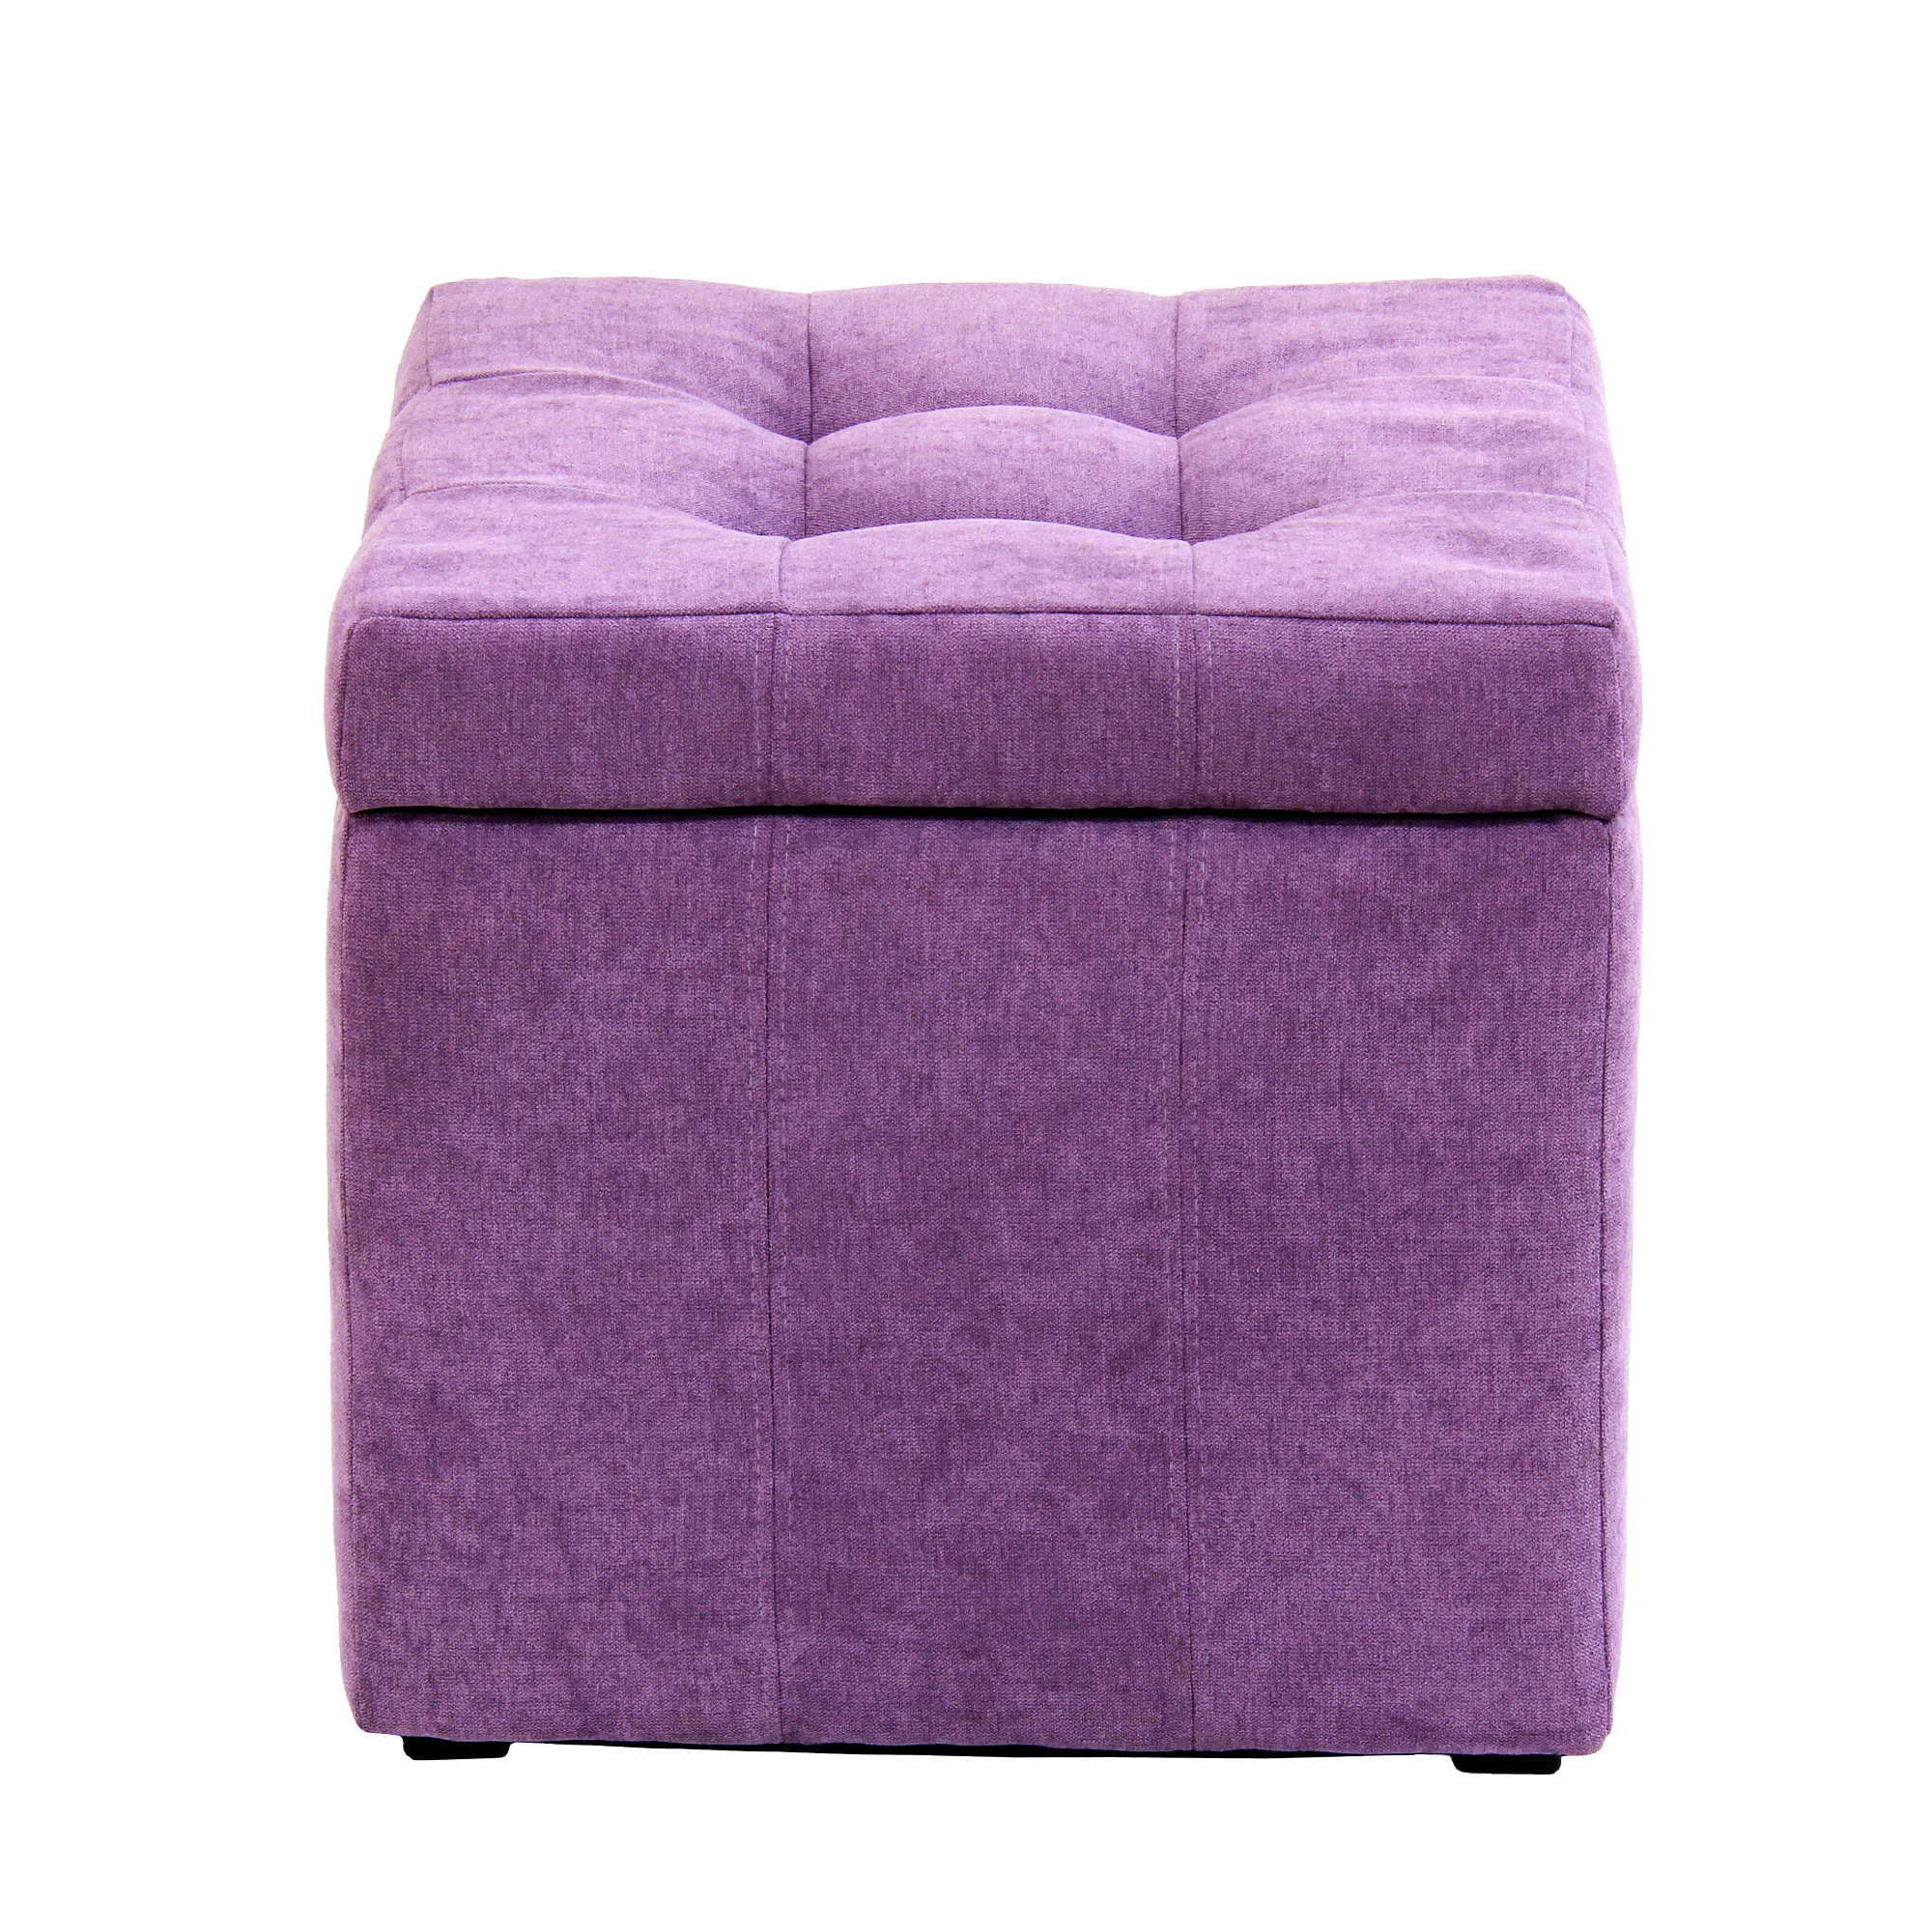 Банкетка Dreambag модерна фиолетовый велюр 46х46х46, размер 46х46х46 см - фото 2